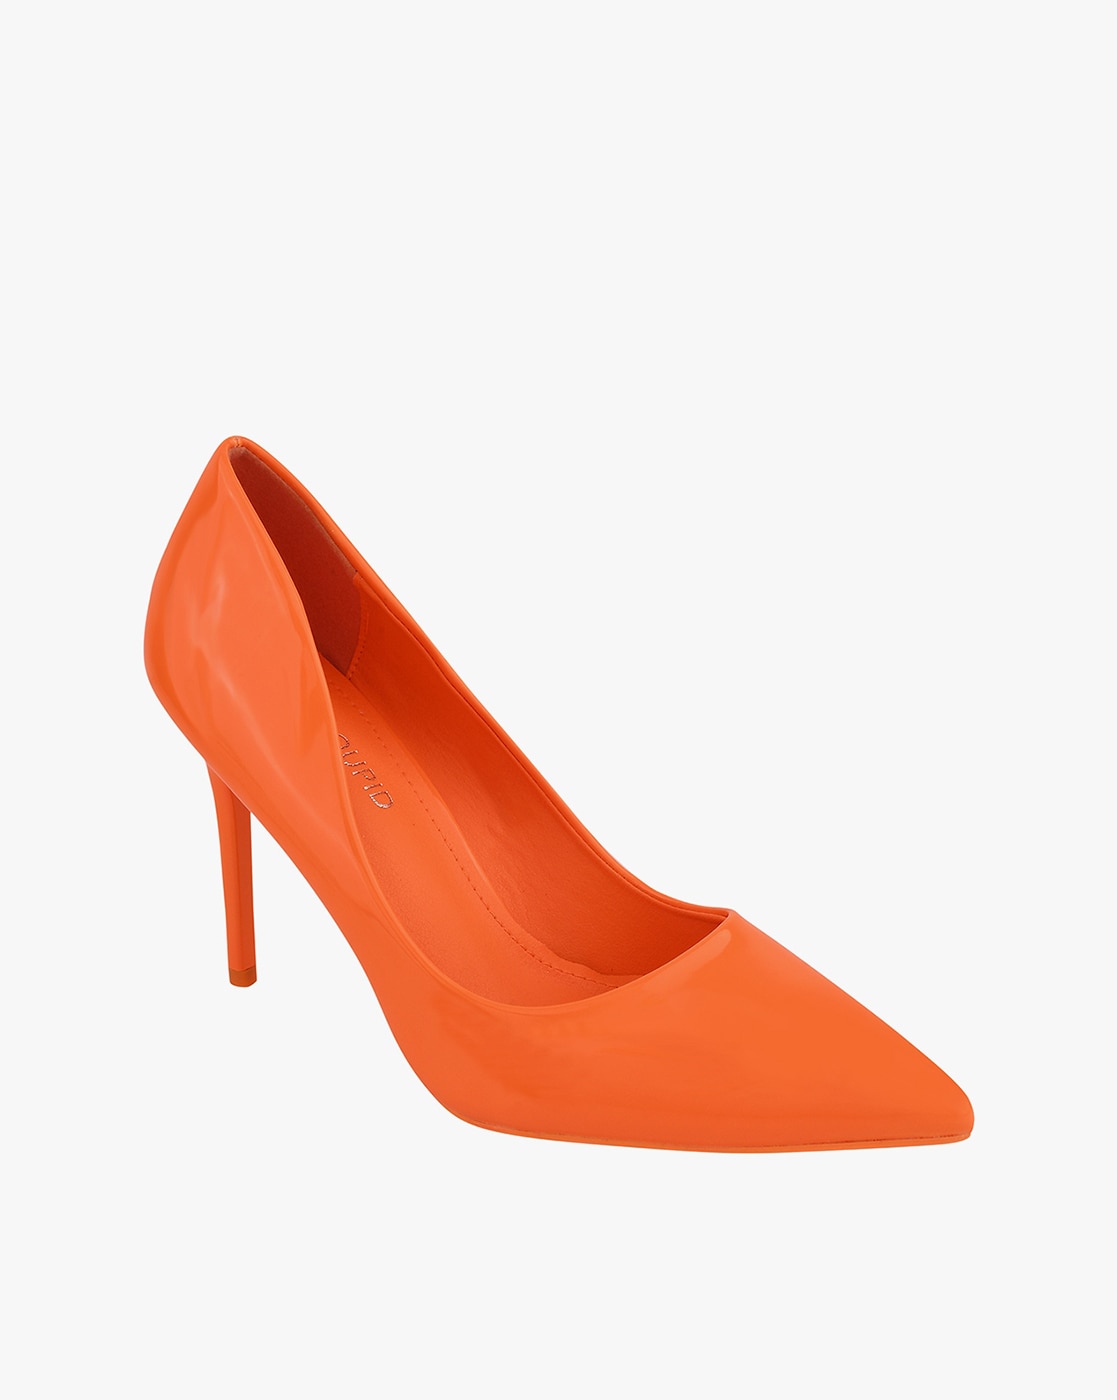 Work Appropriate Shoes | ModCloth | Orange shoes, Orange heels, Heels